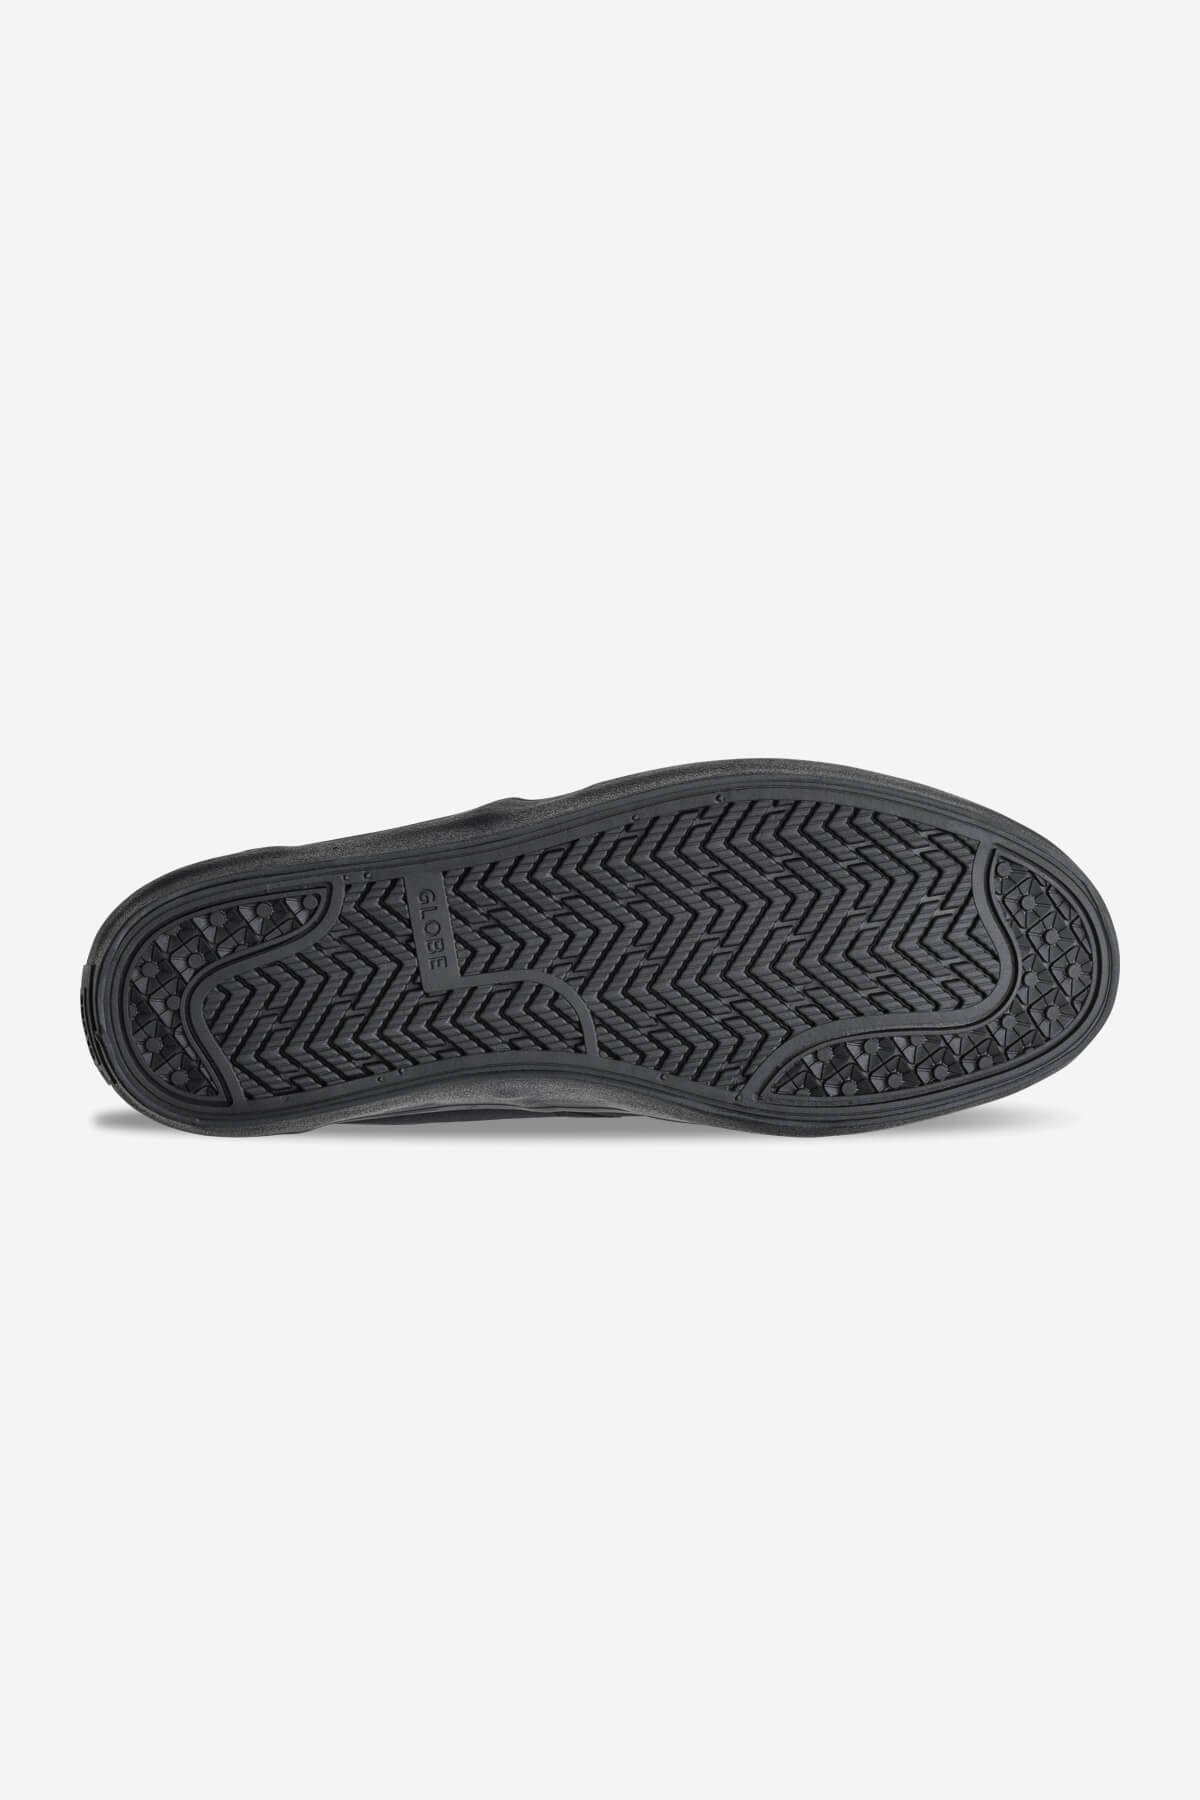 Globe - Motley Ii Strap - Oiled Black/Black - skateboard Chaussures